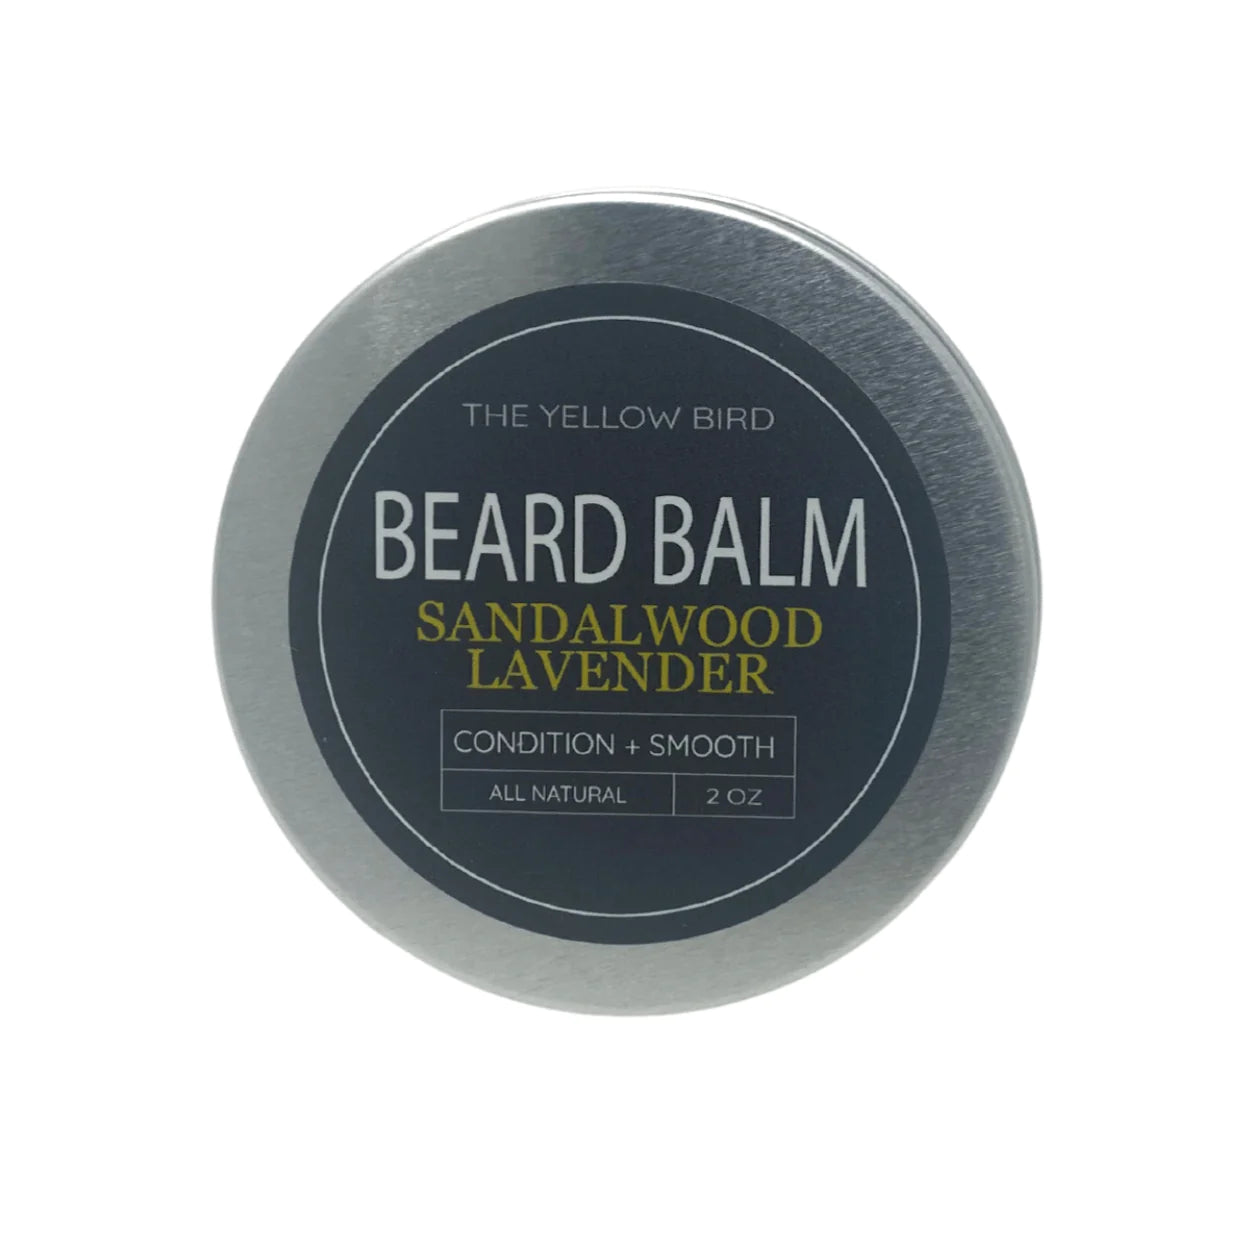 Sandalwood Lavender Beard Balm and Conditioner